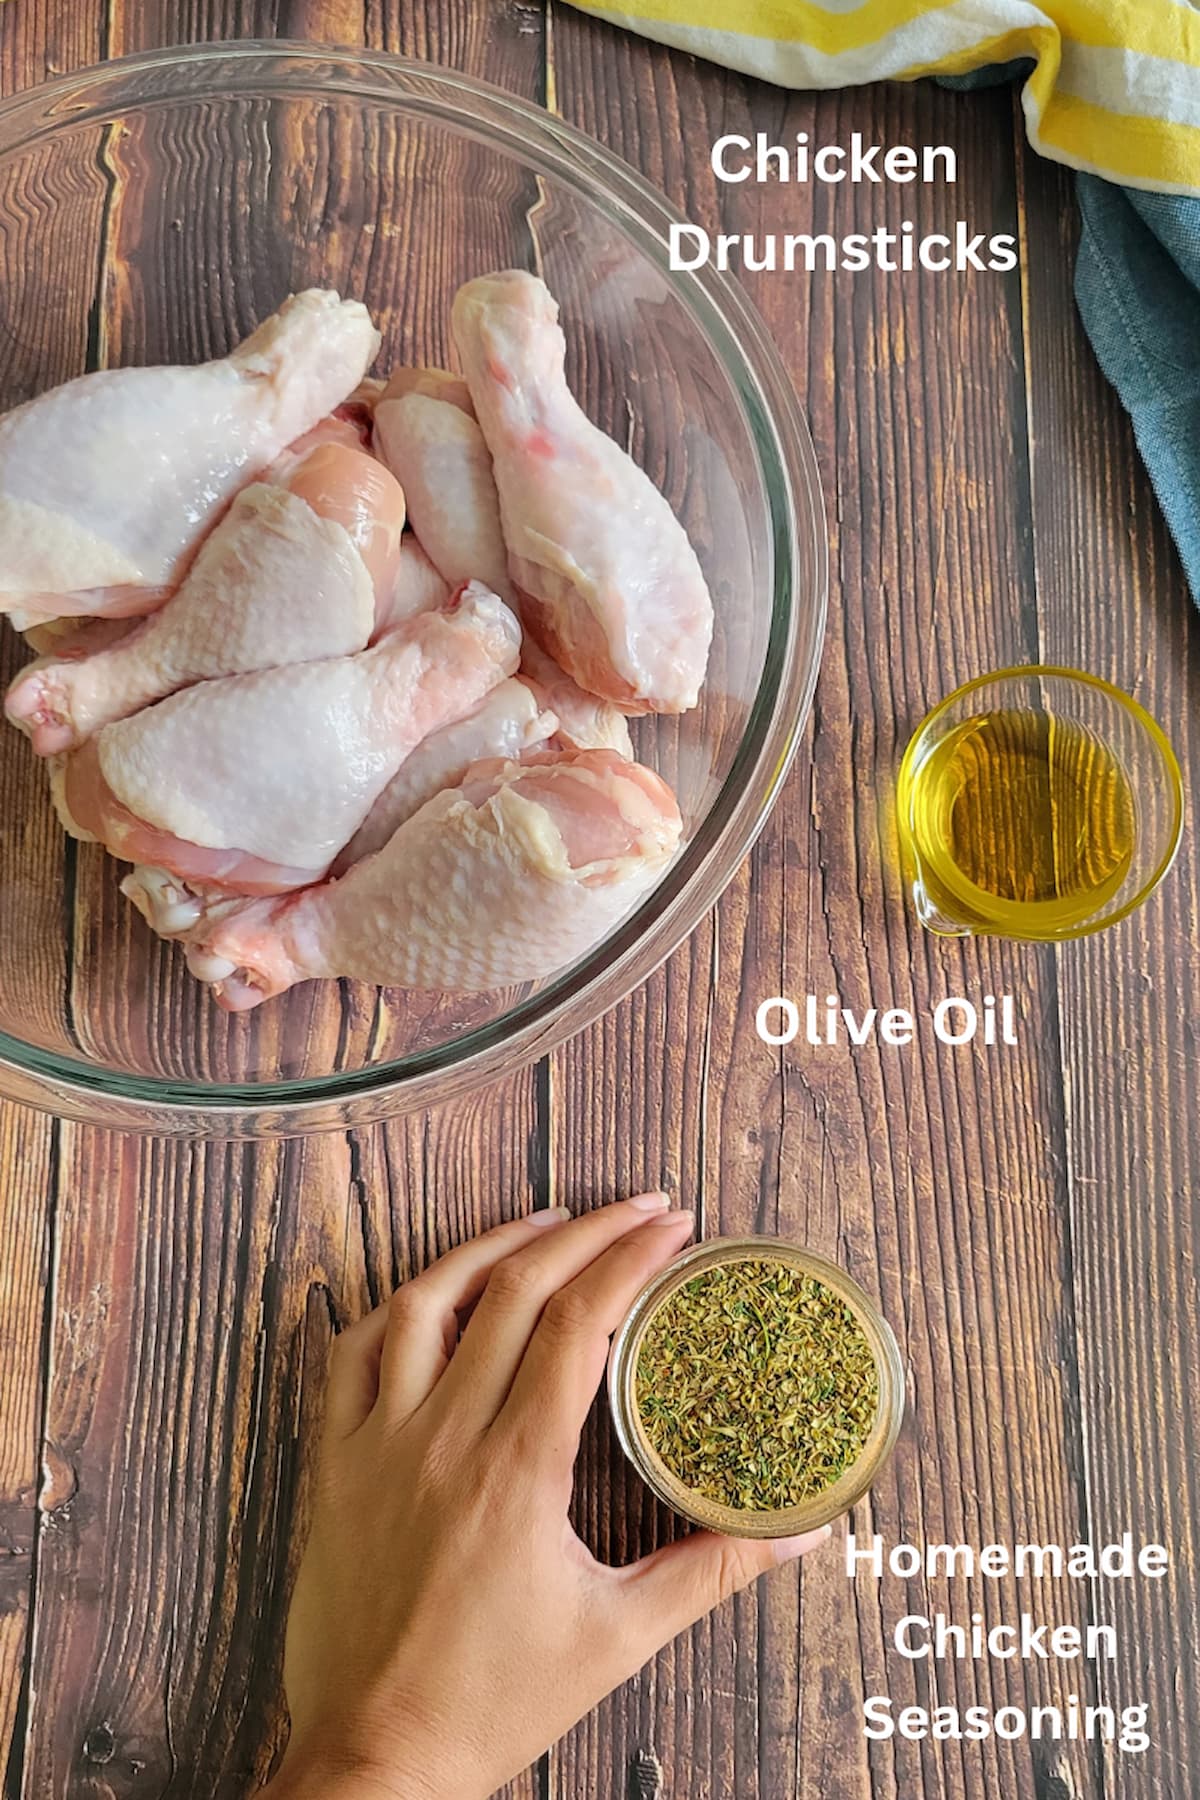 ingredients for air fryer drumsticks - drumsticks, olive oil, homemade chicken seasoning